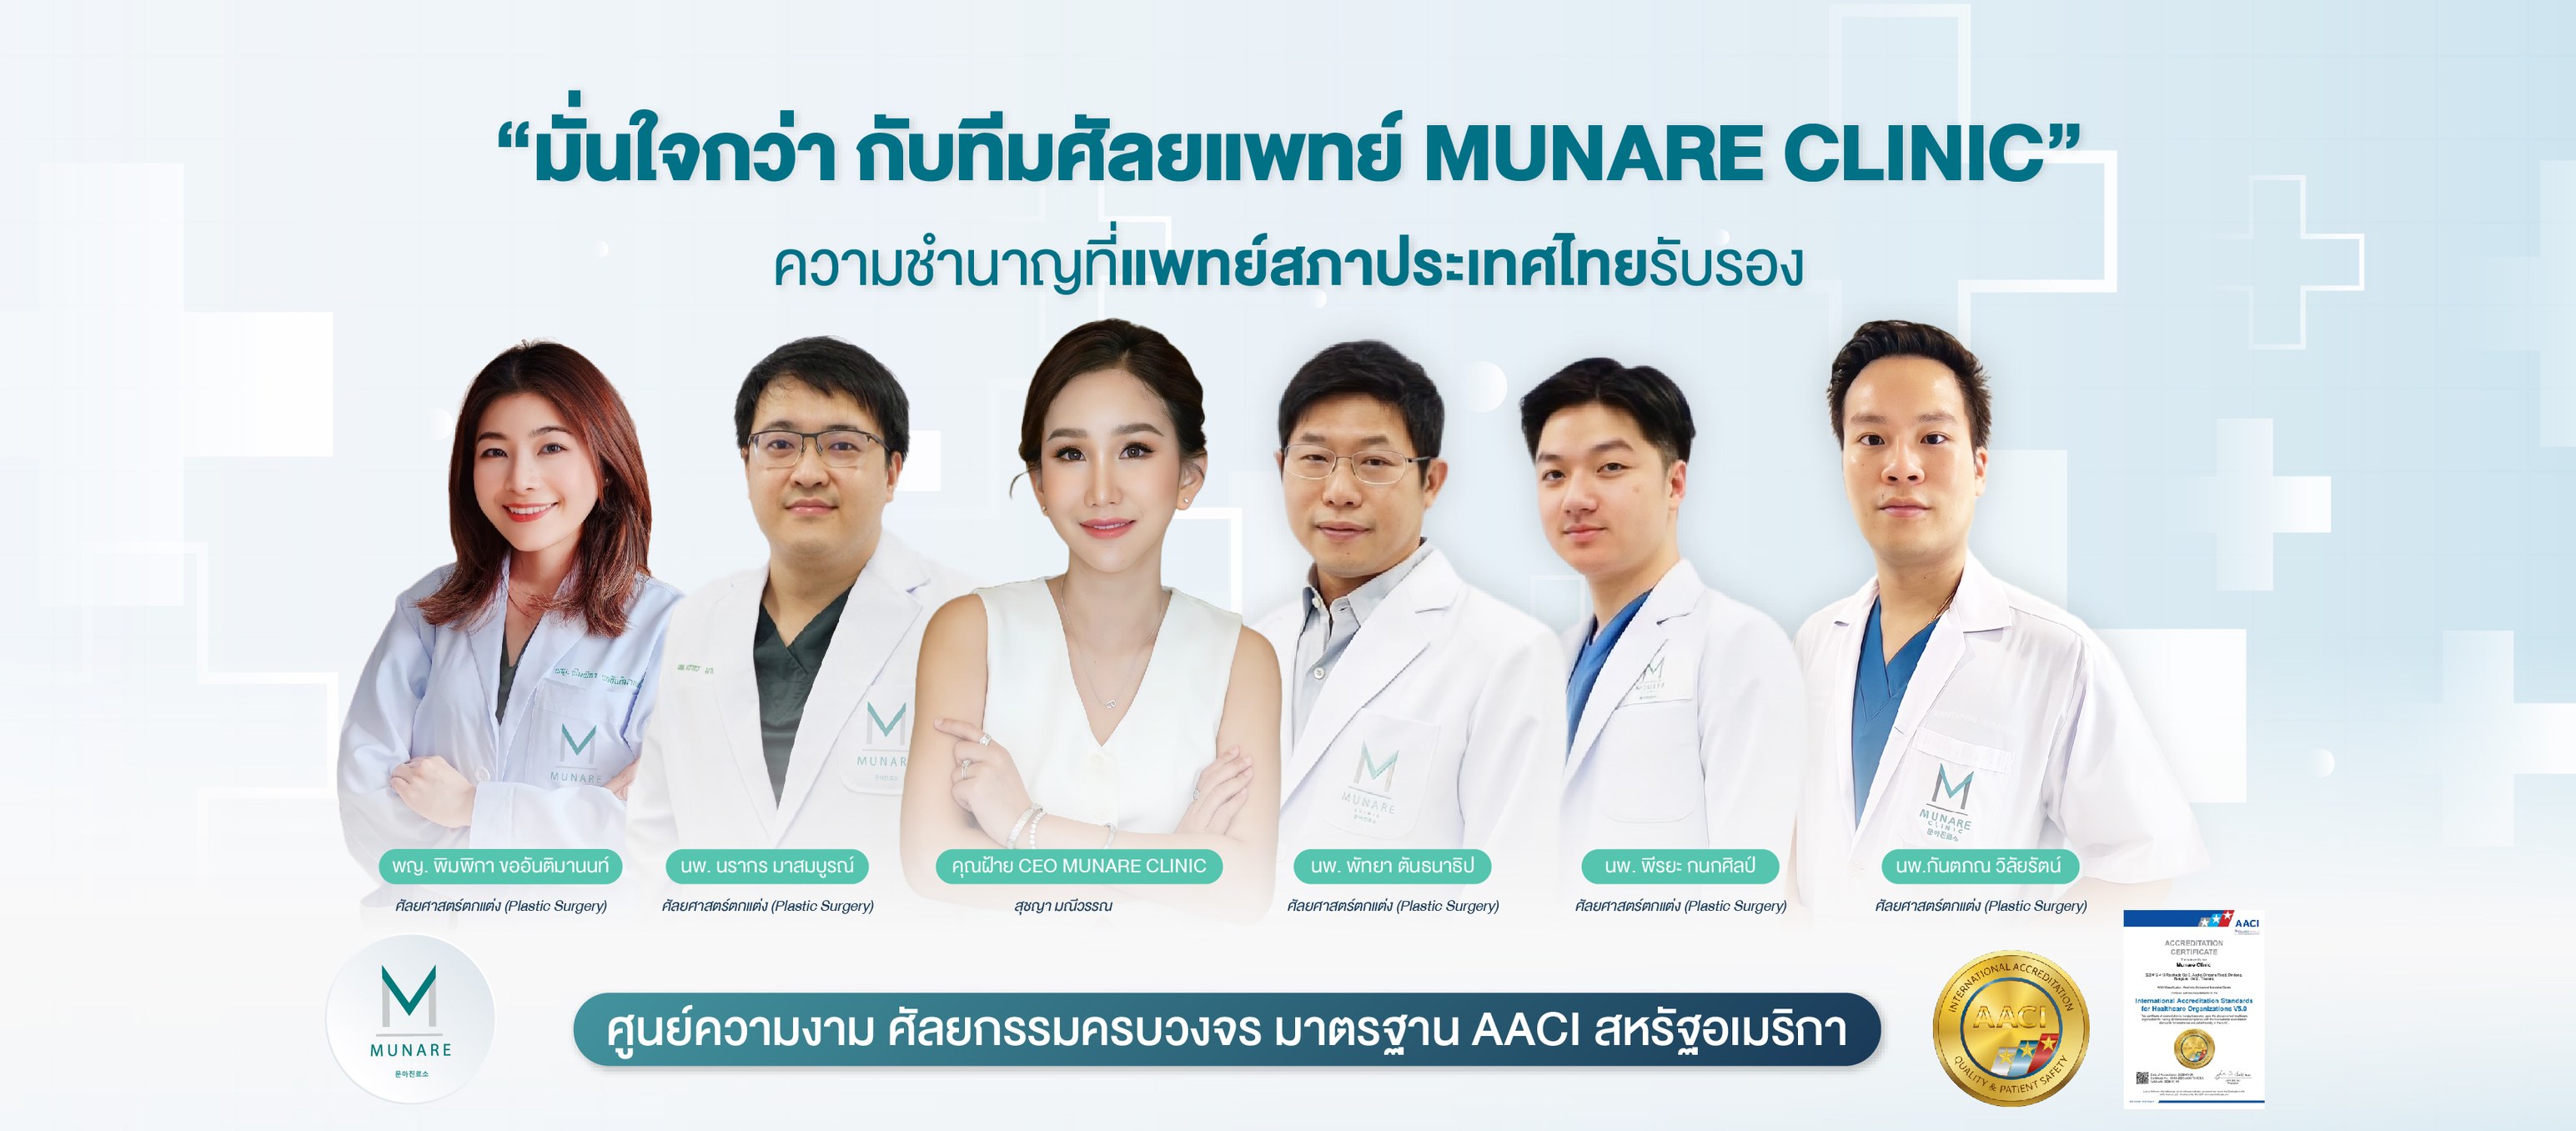 Munare Clinic